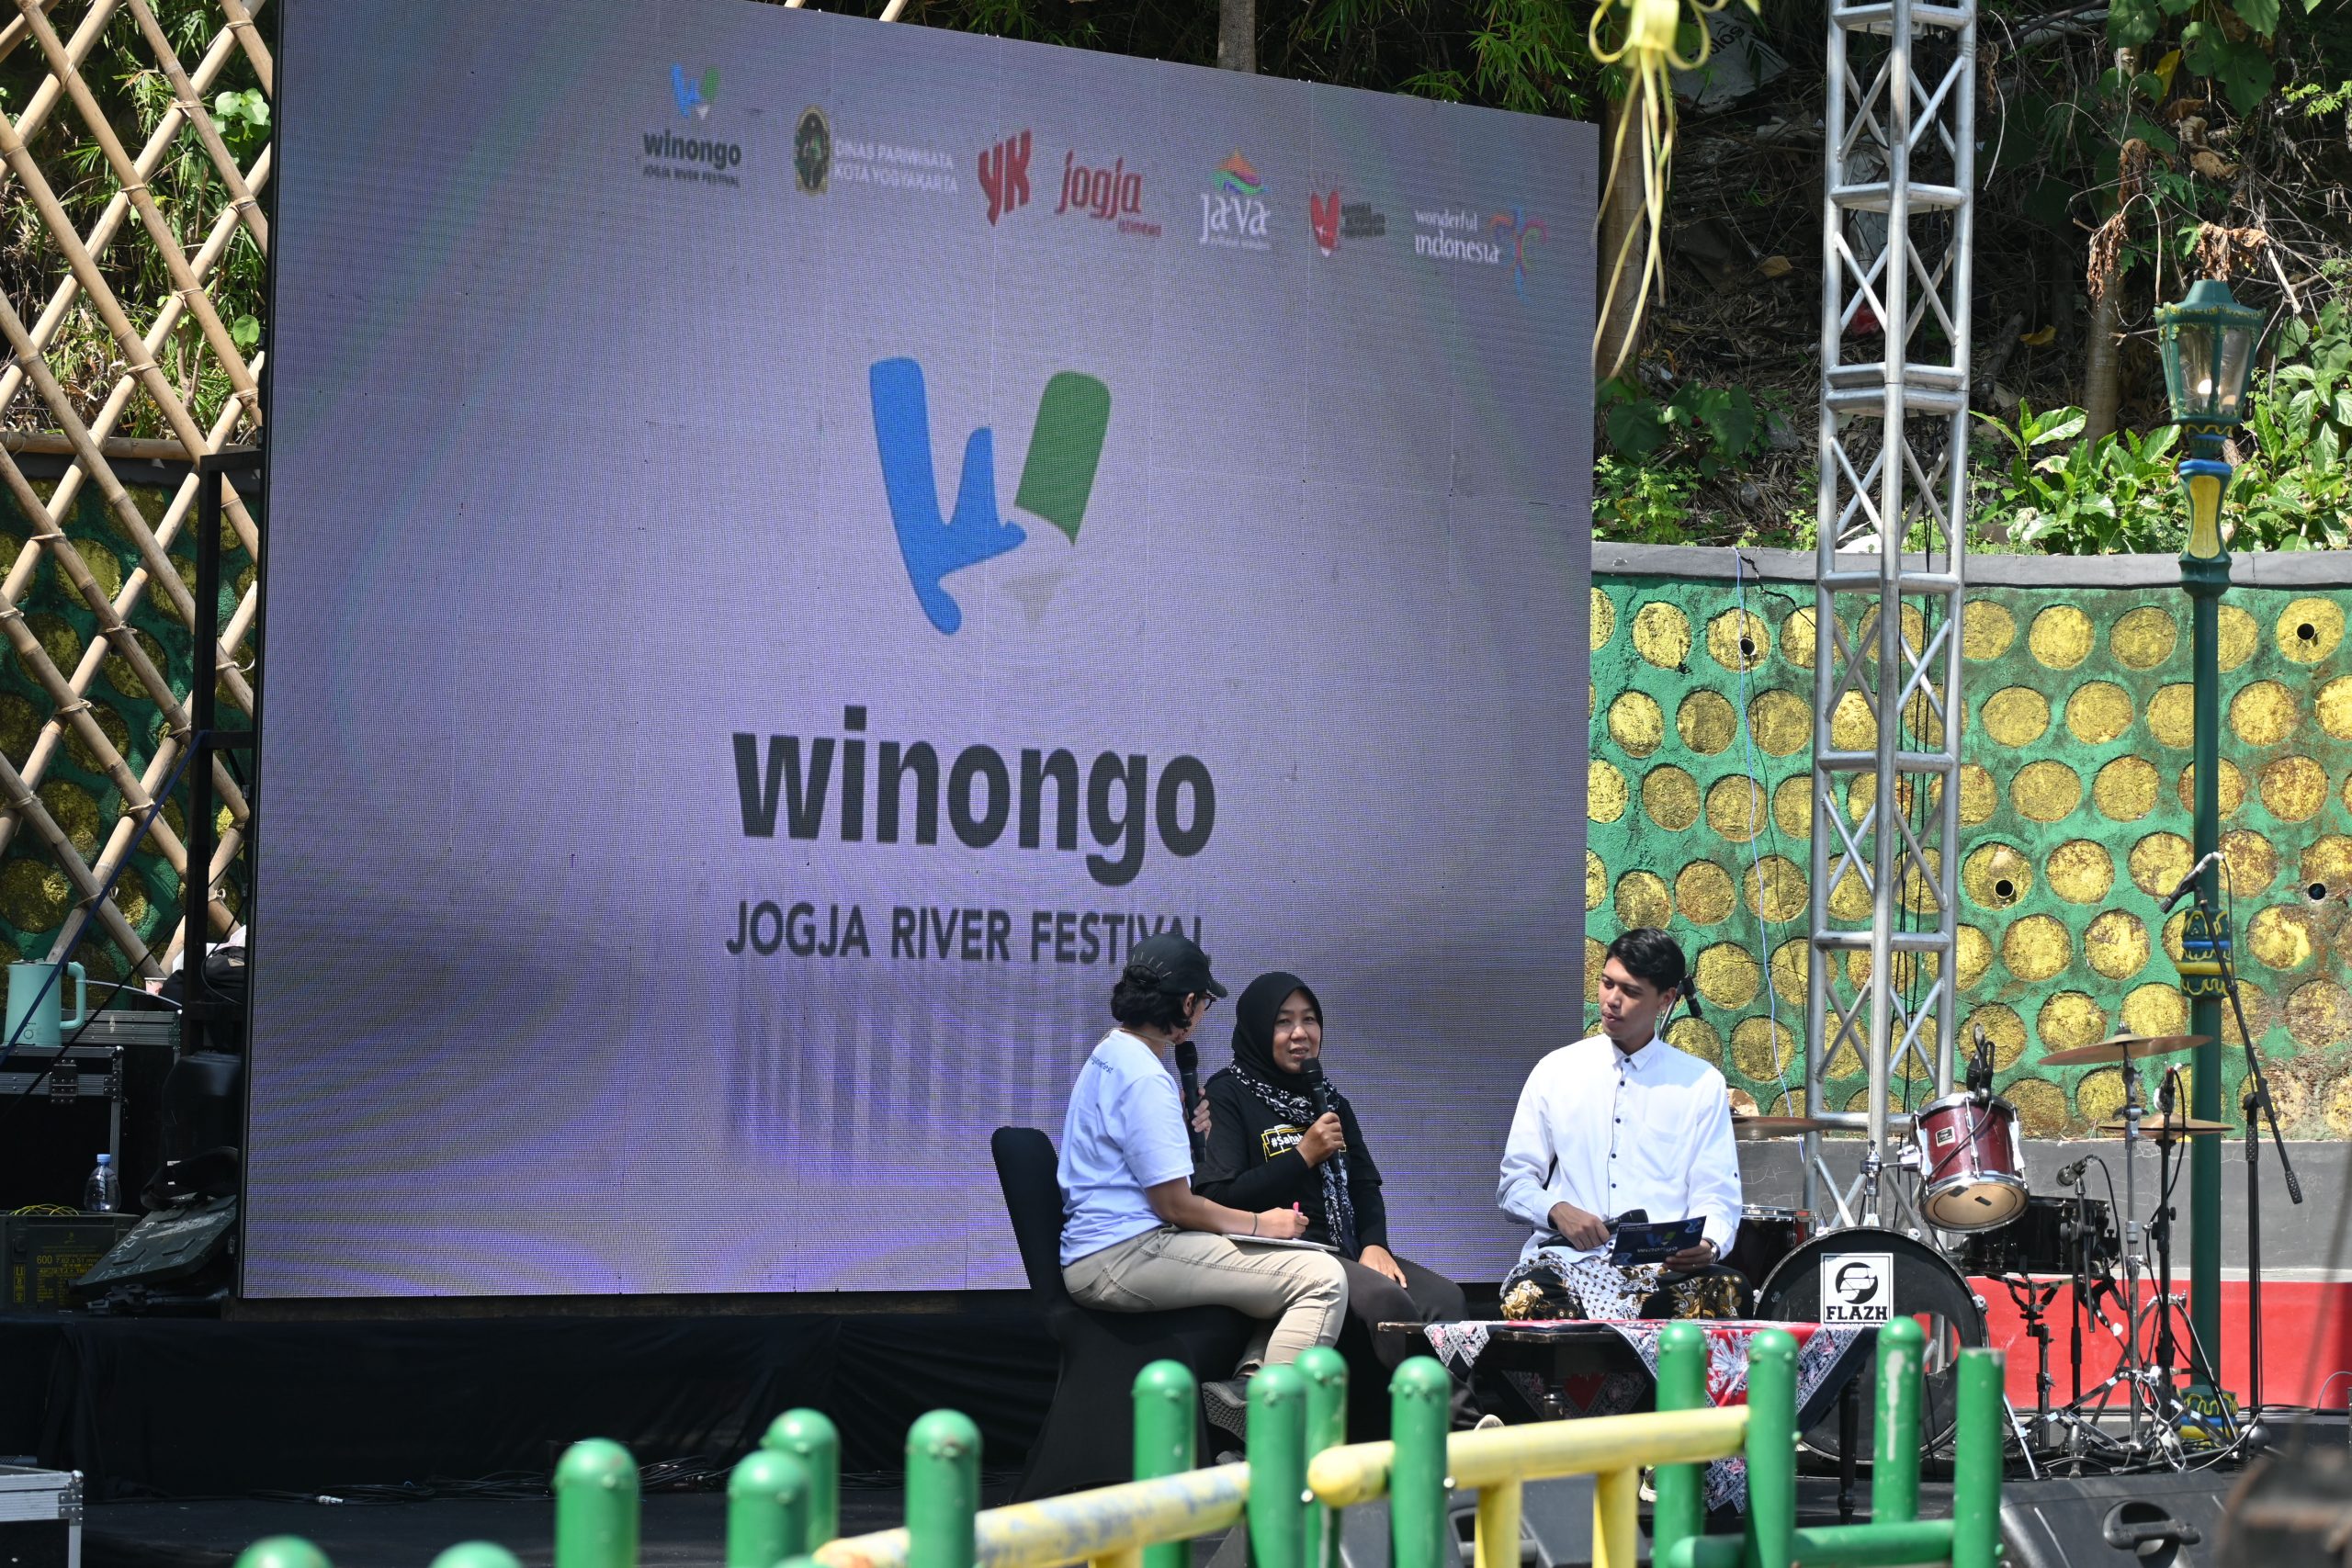 Winongo Jogja River Festival